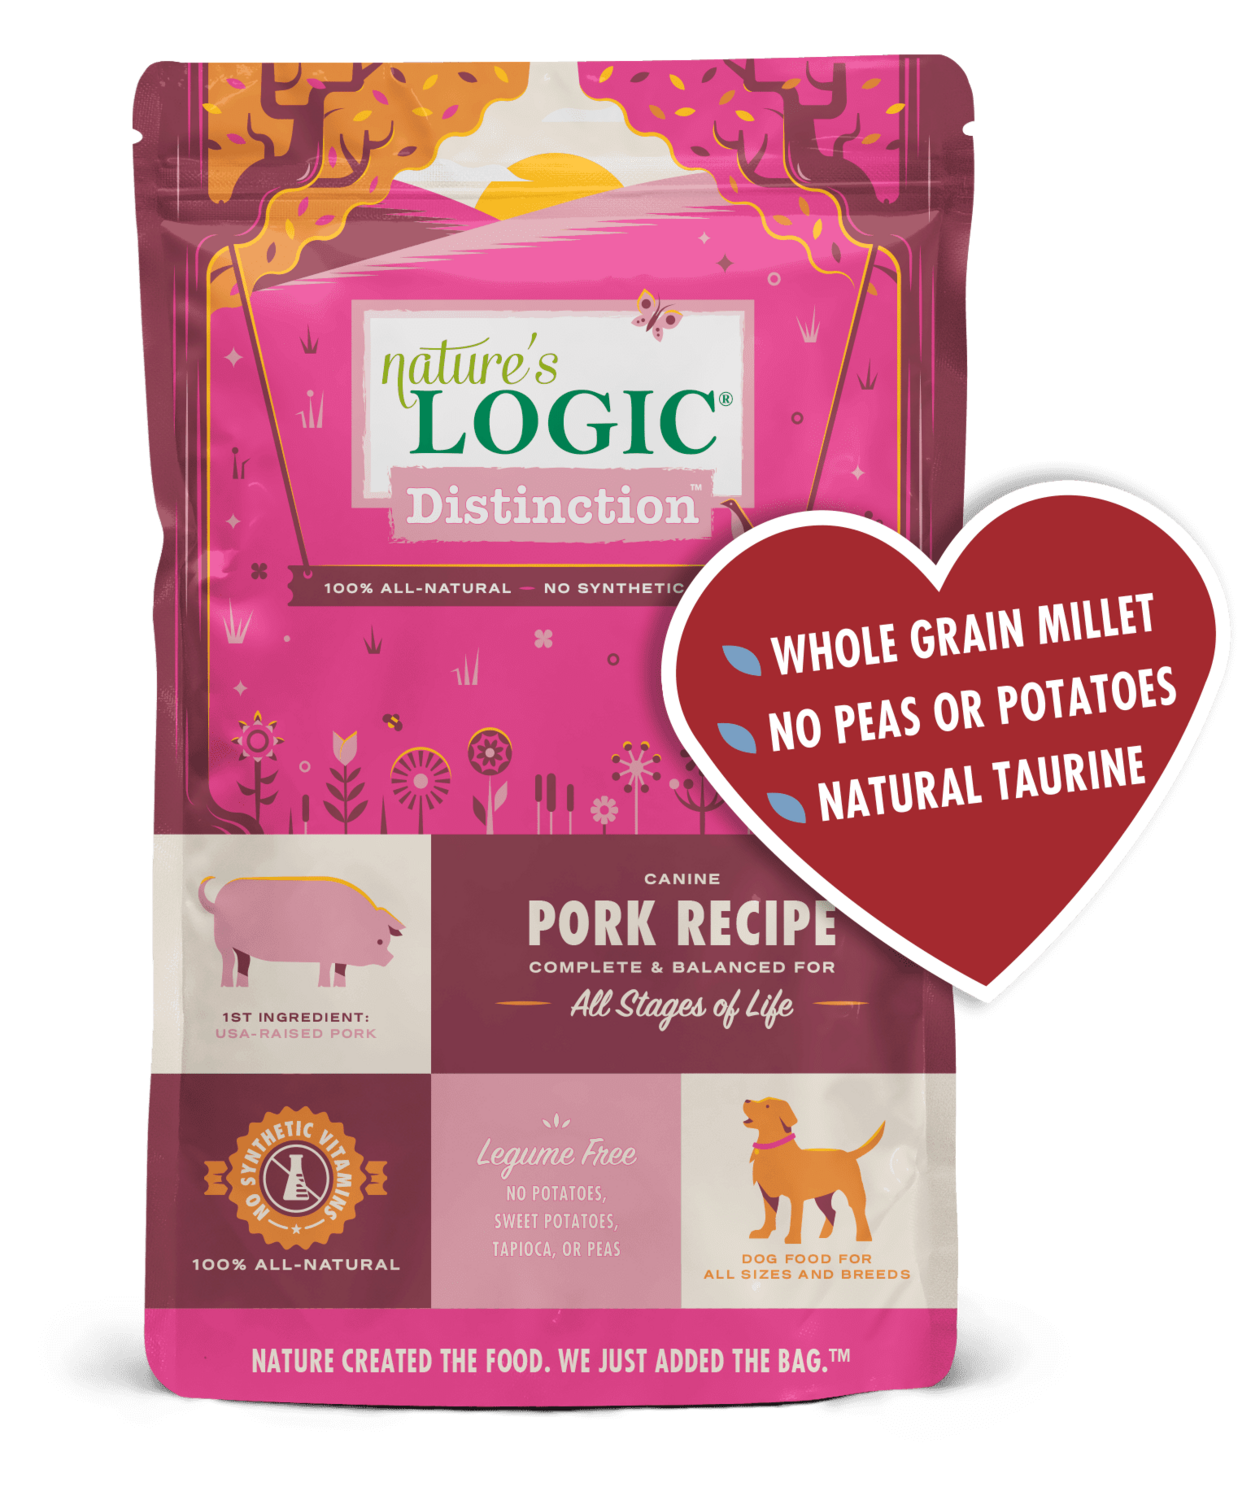 NATURES LOGIC - Distinction Pork - 4.4lb